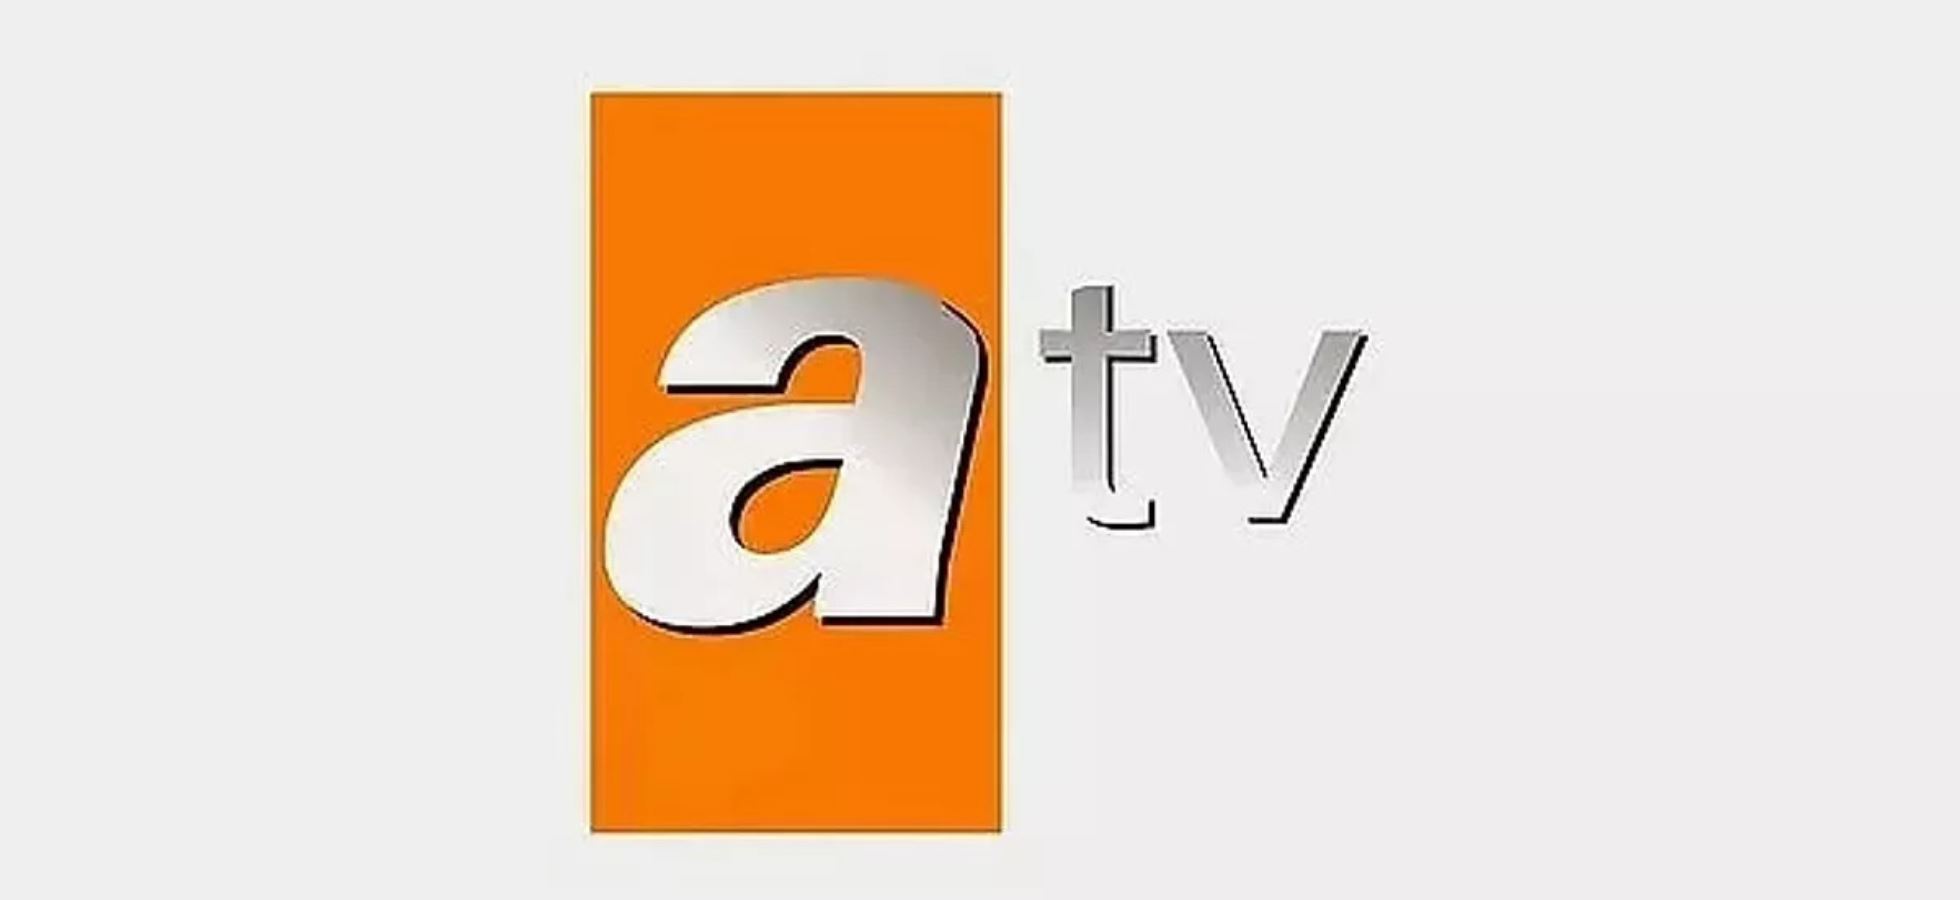 Tv atv canli yayin. Atv (Турция). Atv logo. Atv Турция прямой эфир. АТВ ФМОС ТВ.